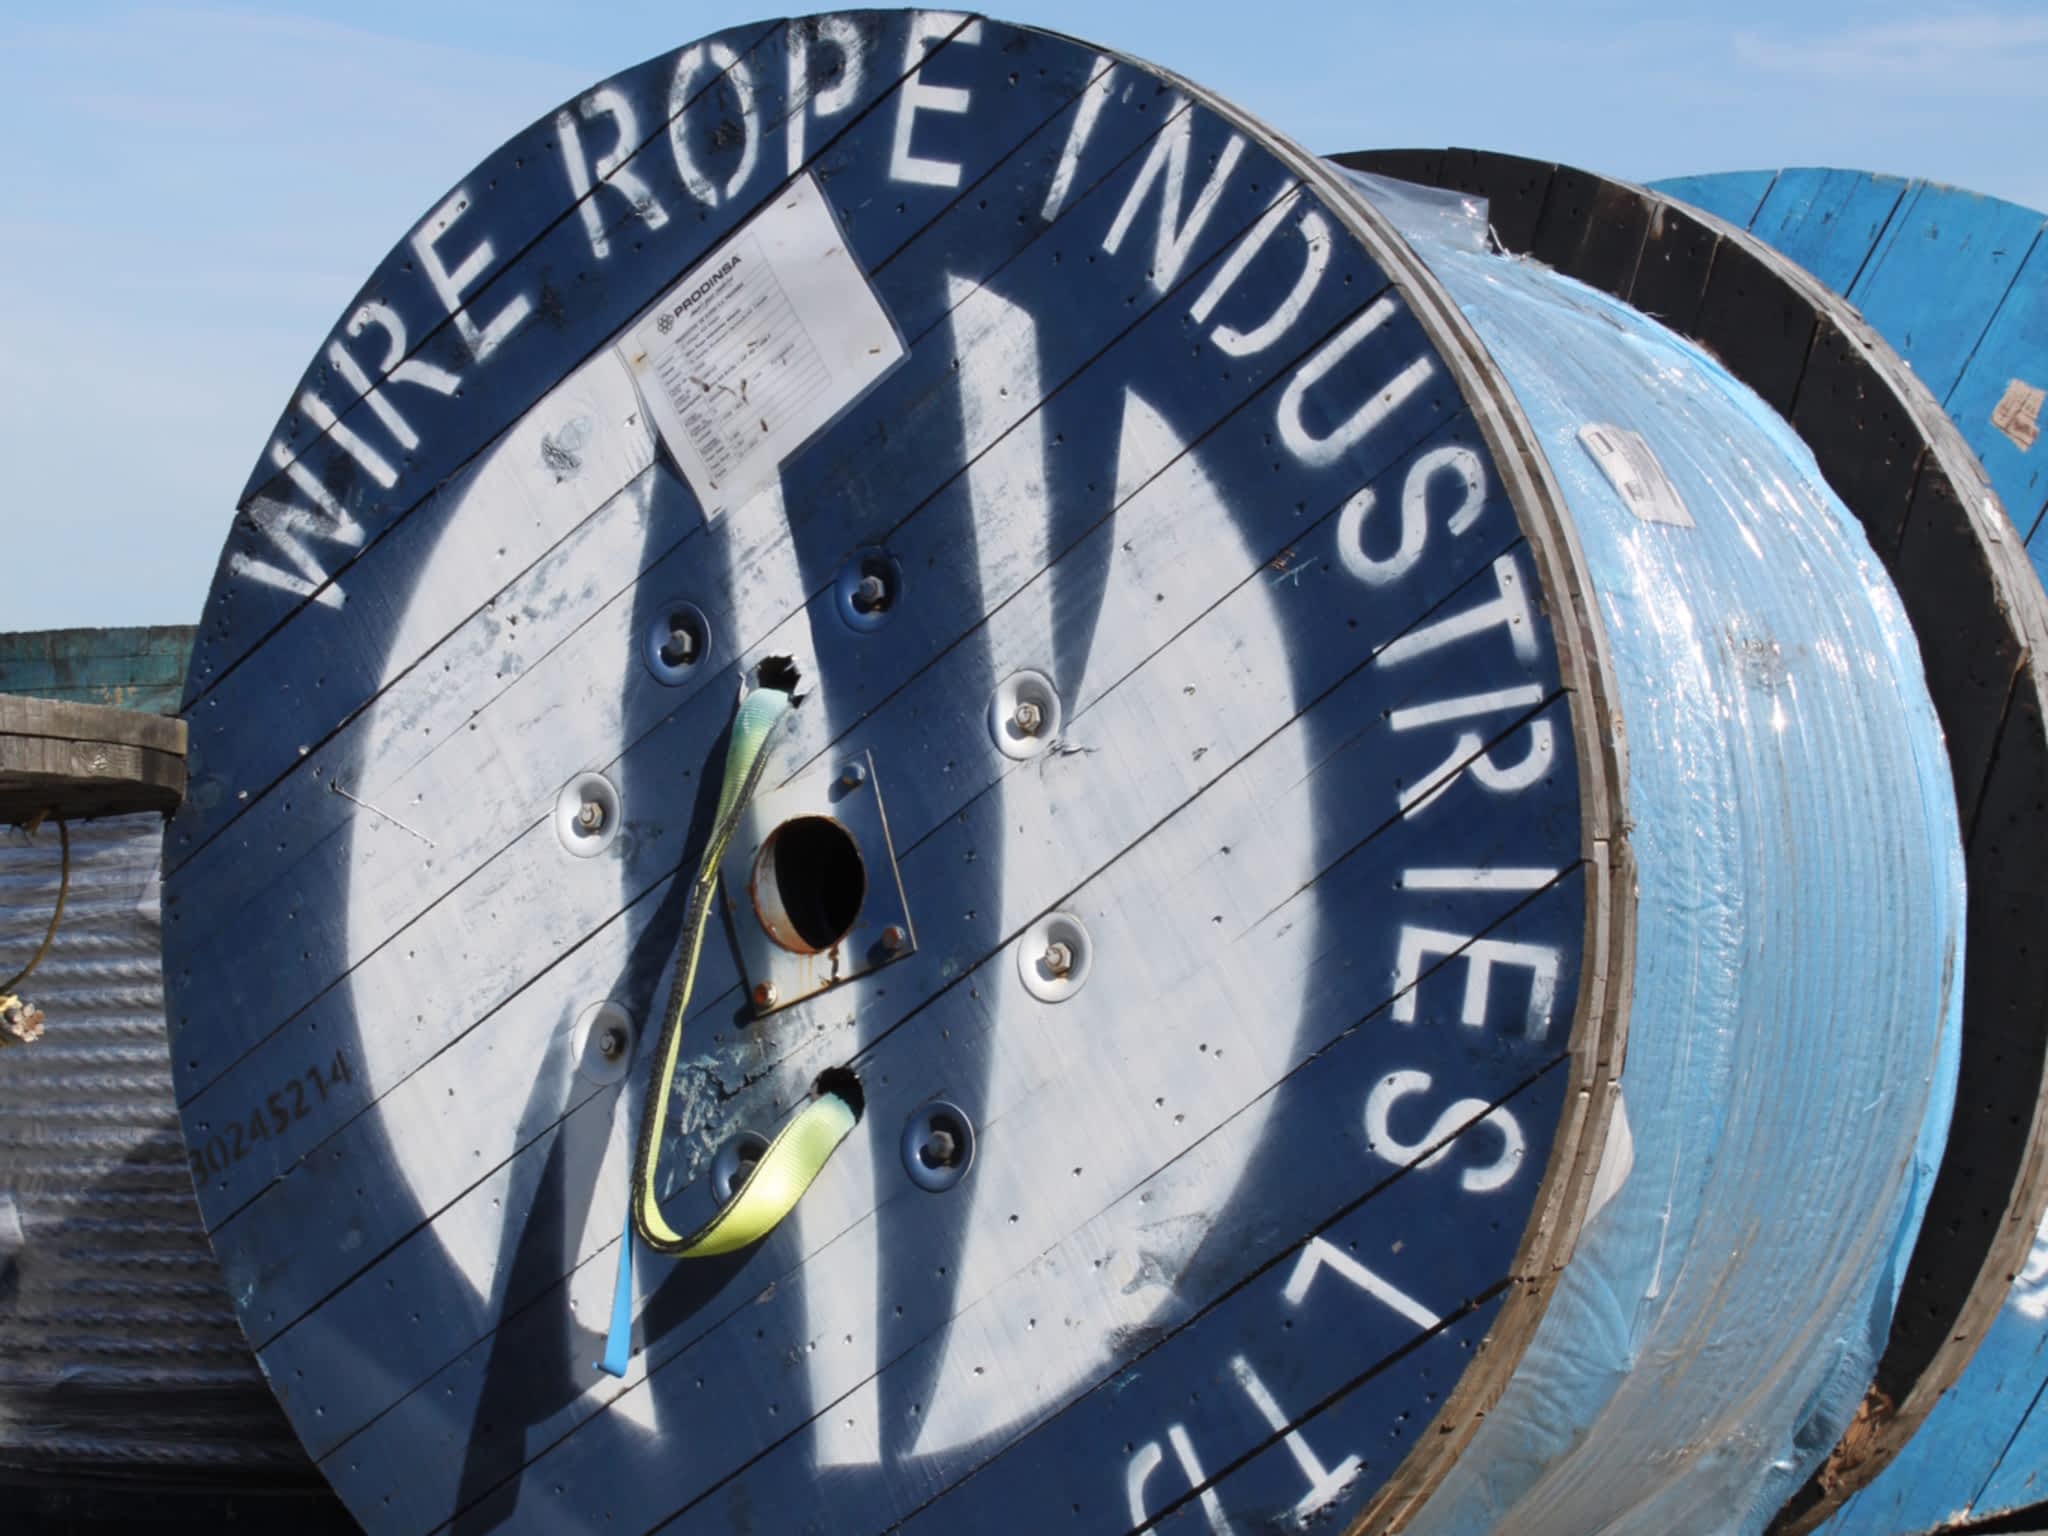 photo Wire Rope Industries Atlantic